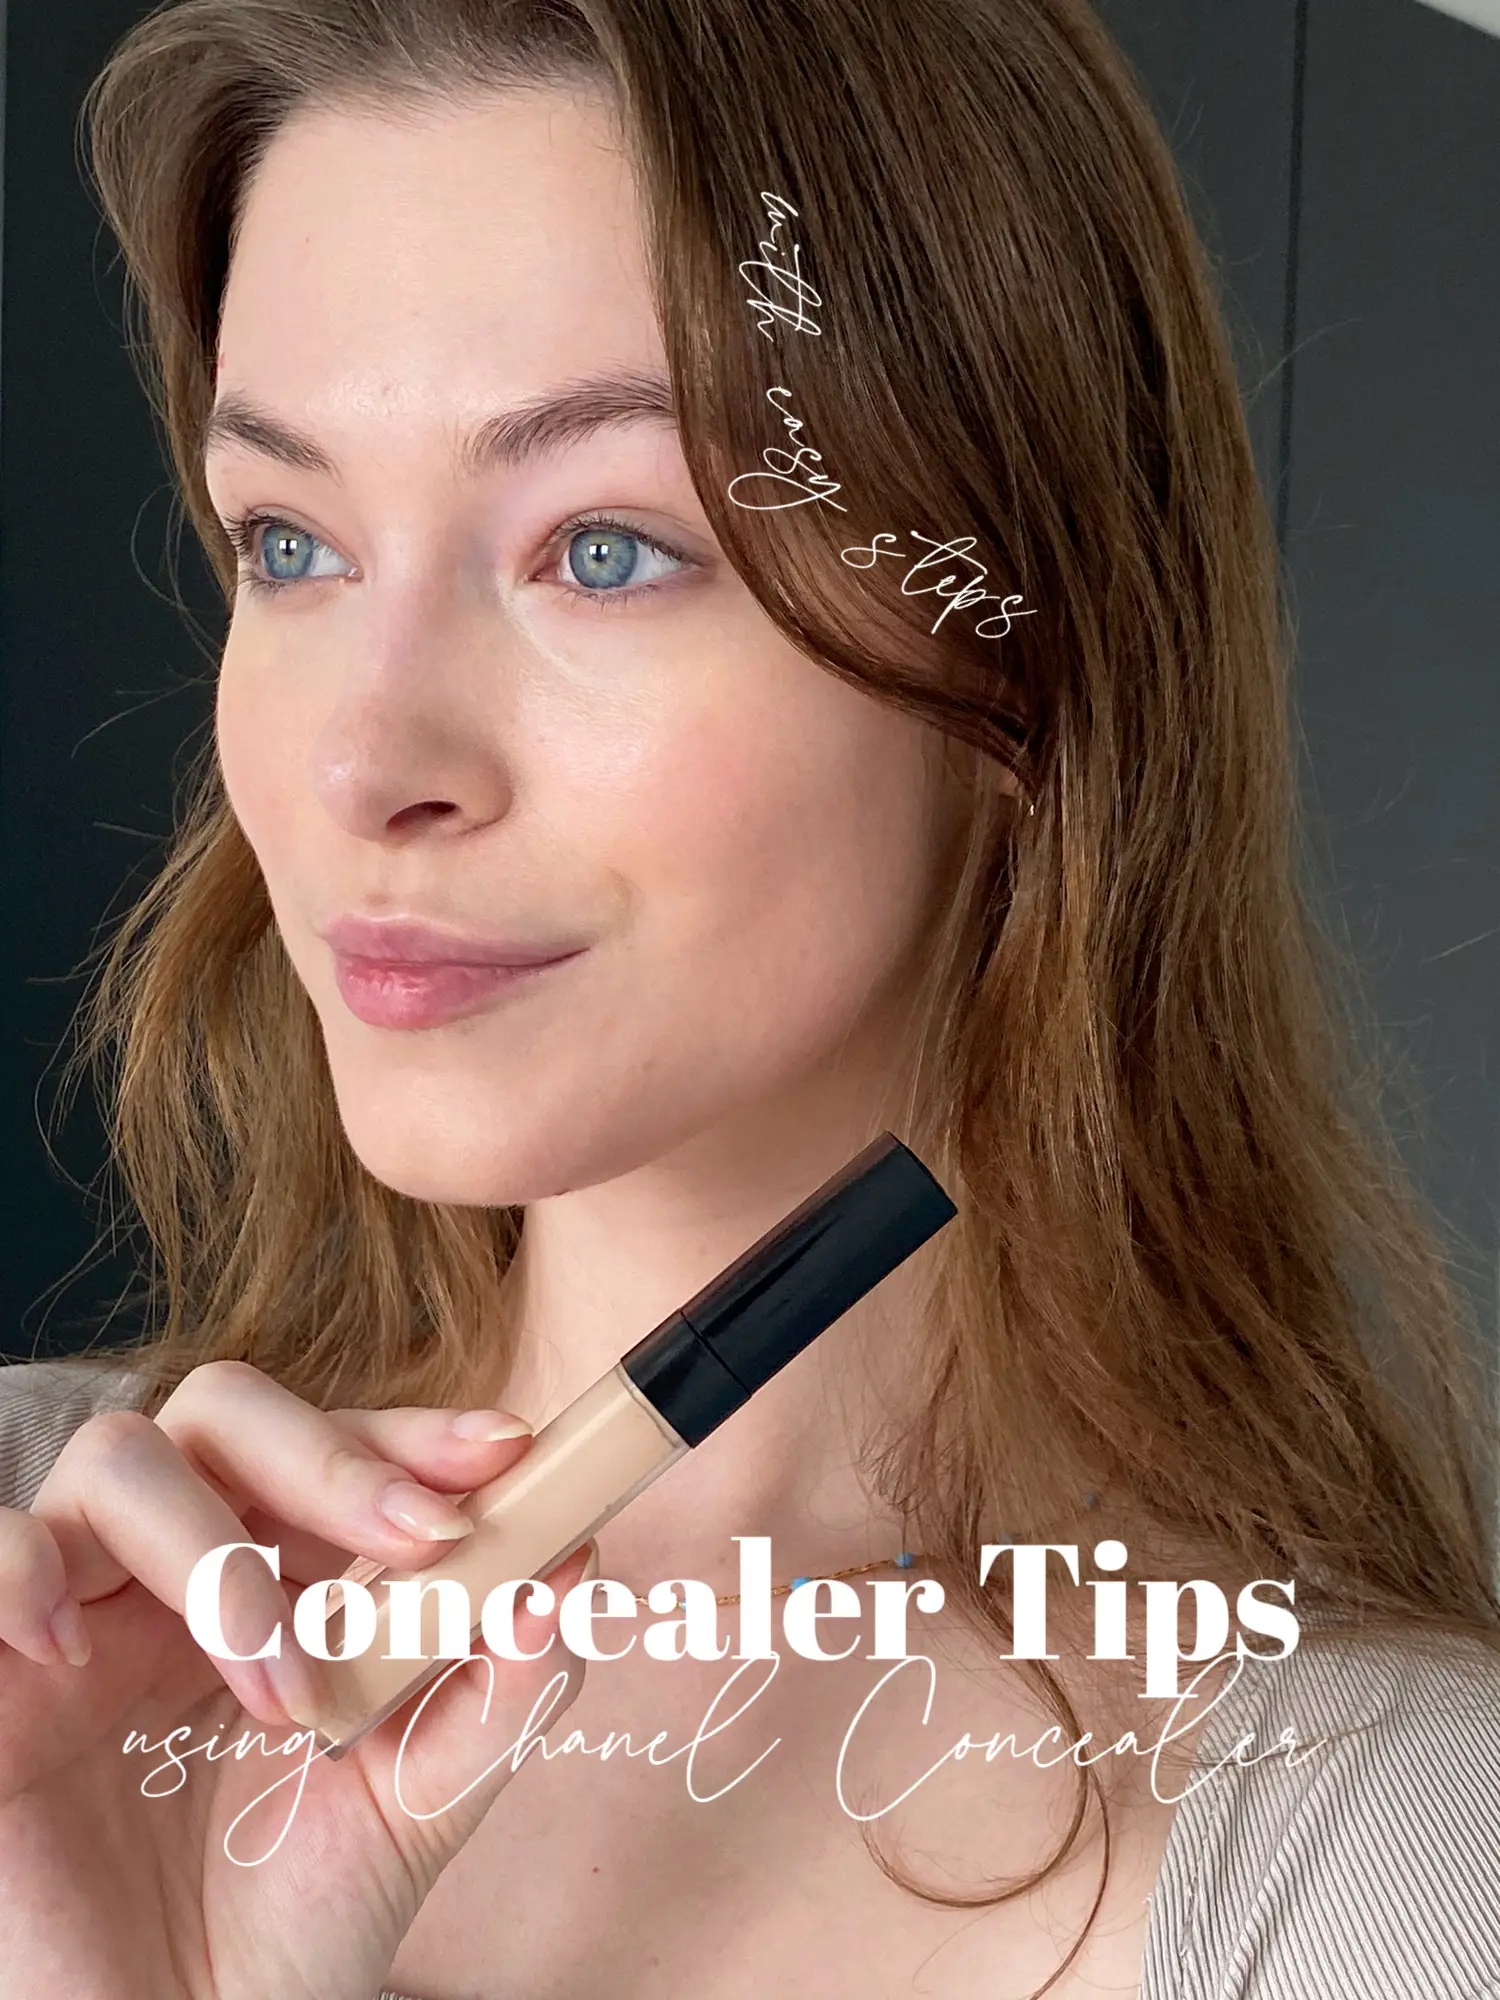 Concealer Tips ✨ Testing Chanel Longwear Concealer